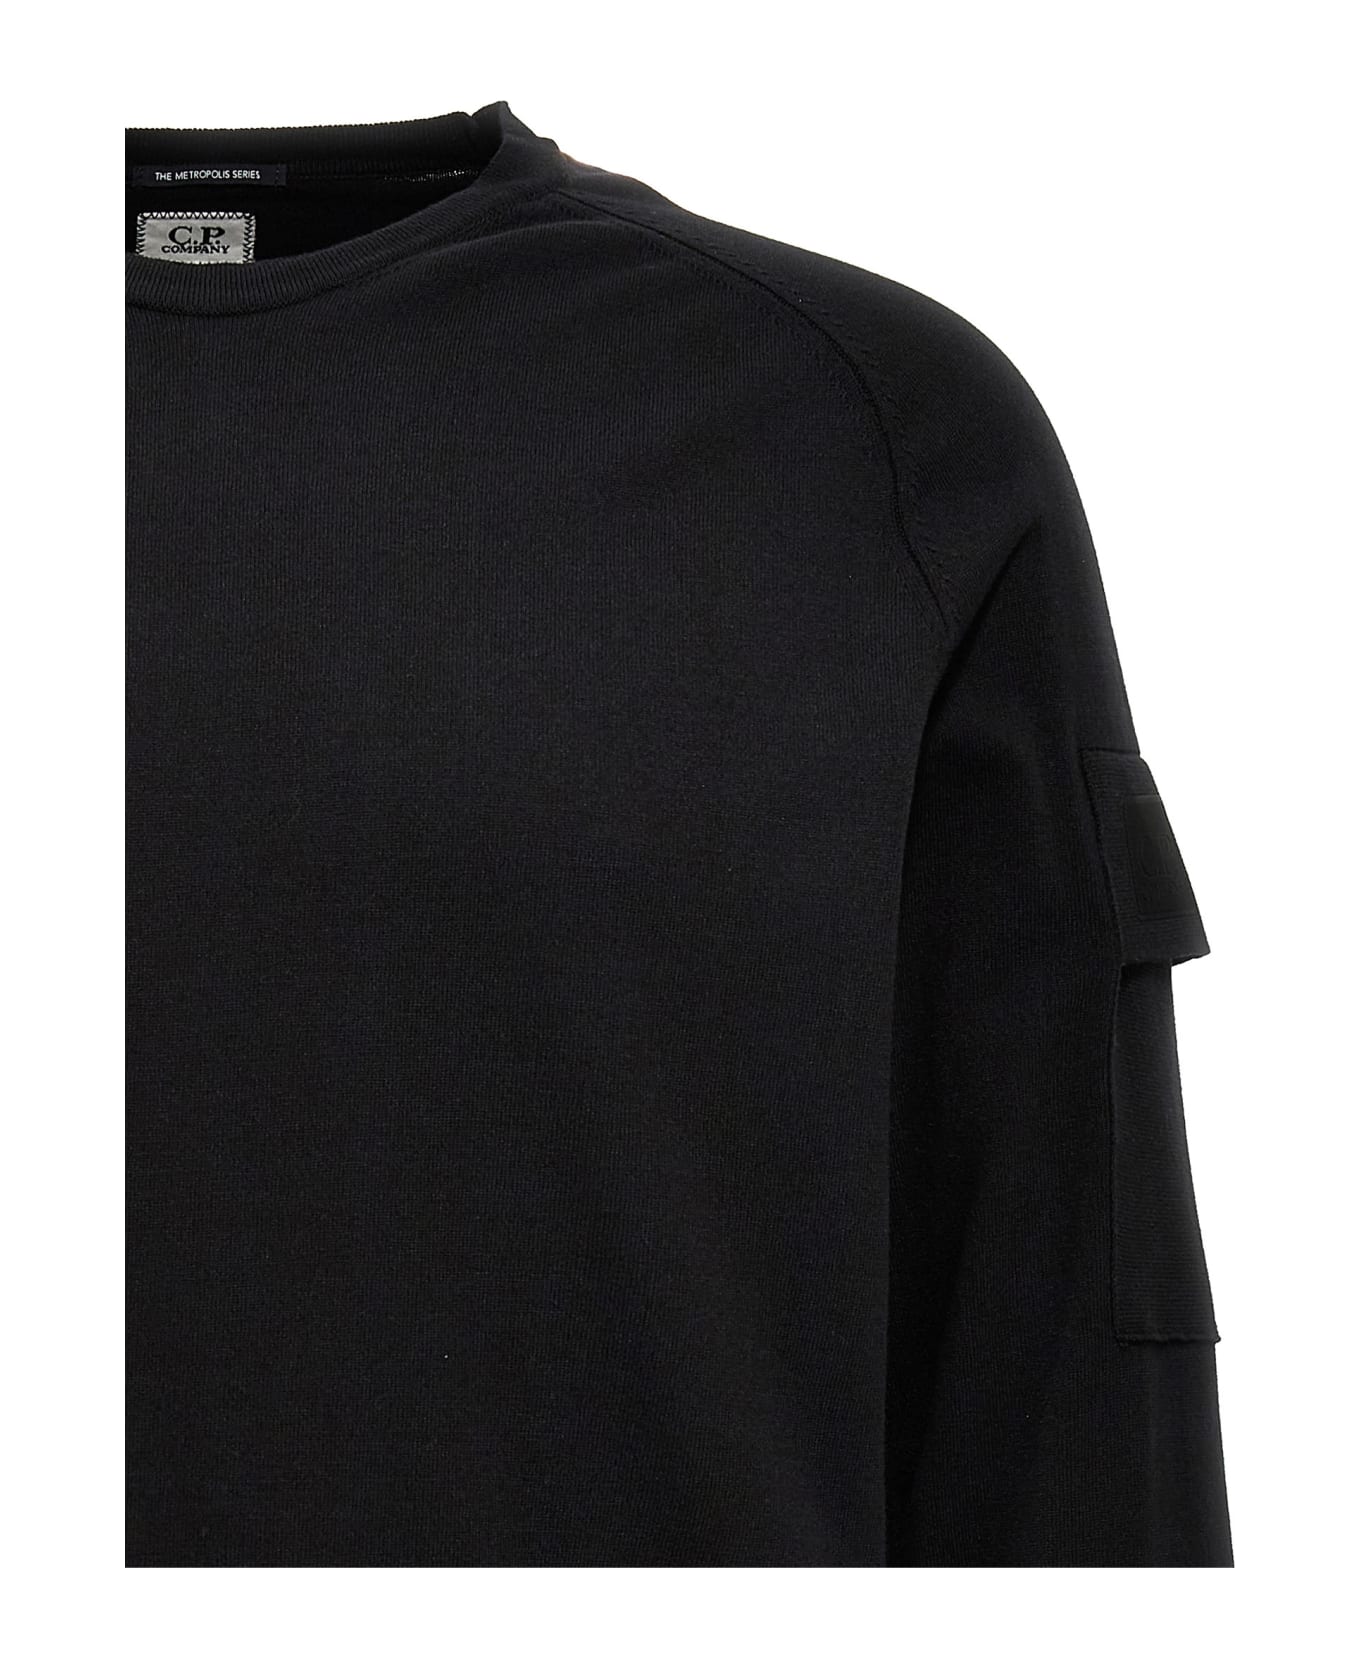 C.P. Company 'the Metropolis Series' Sweater - Black